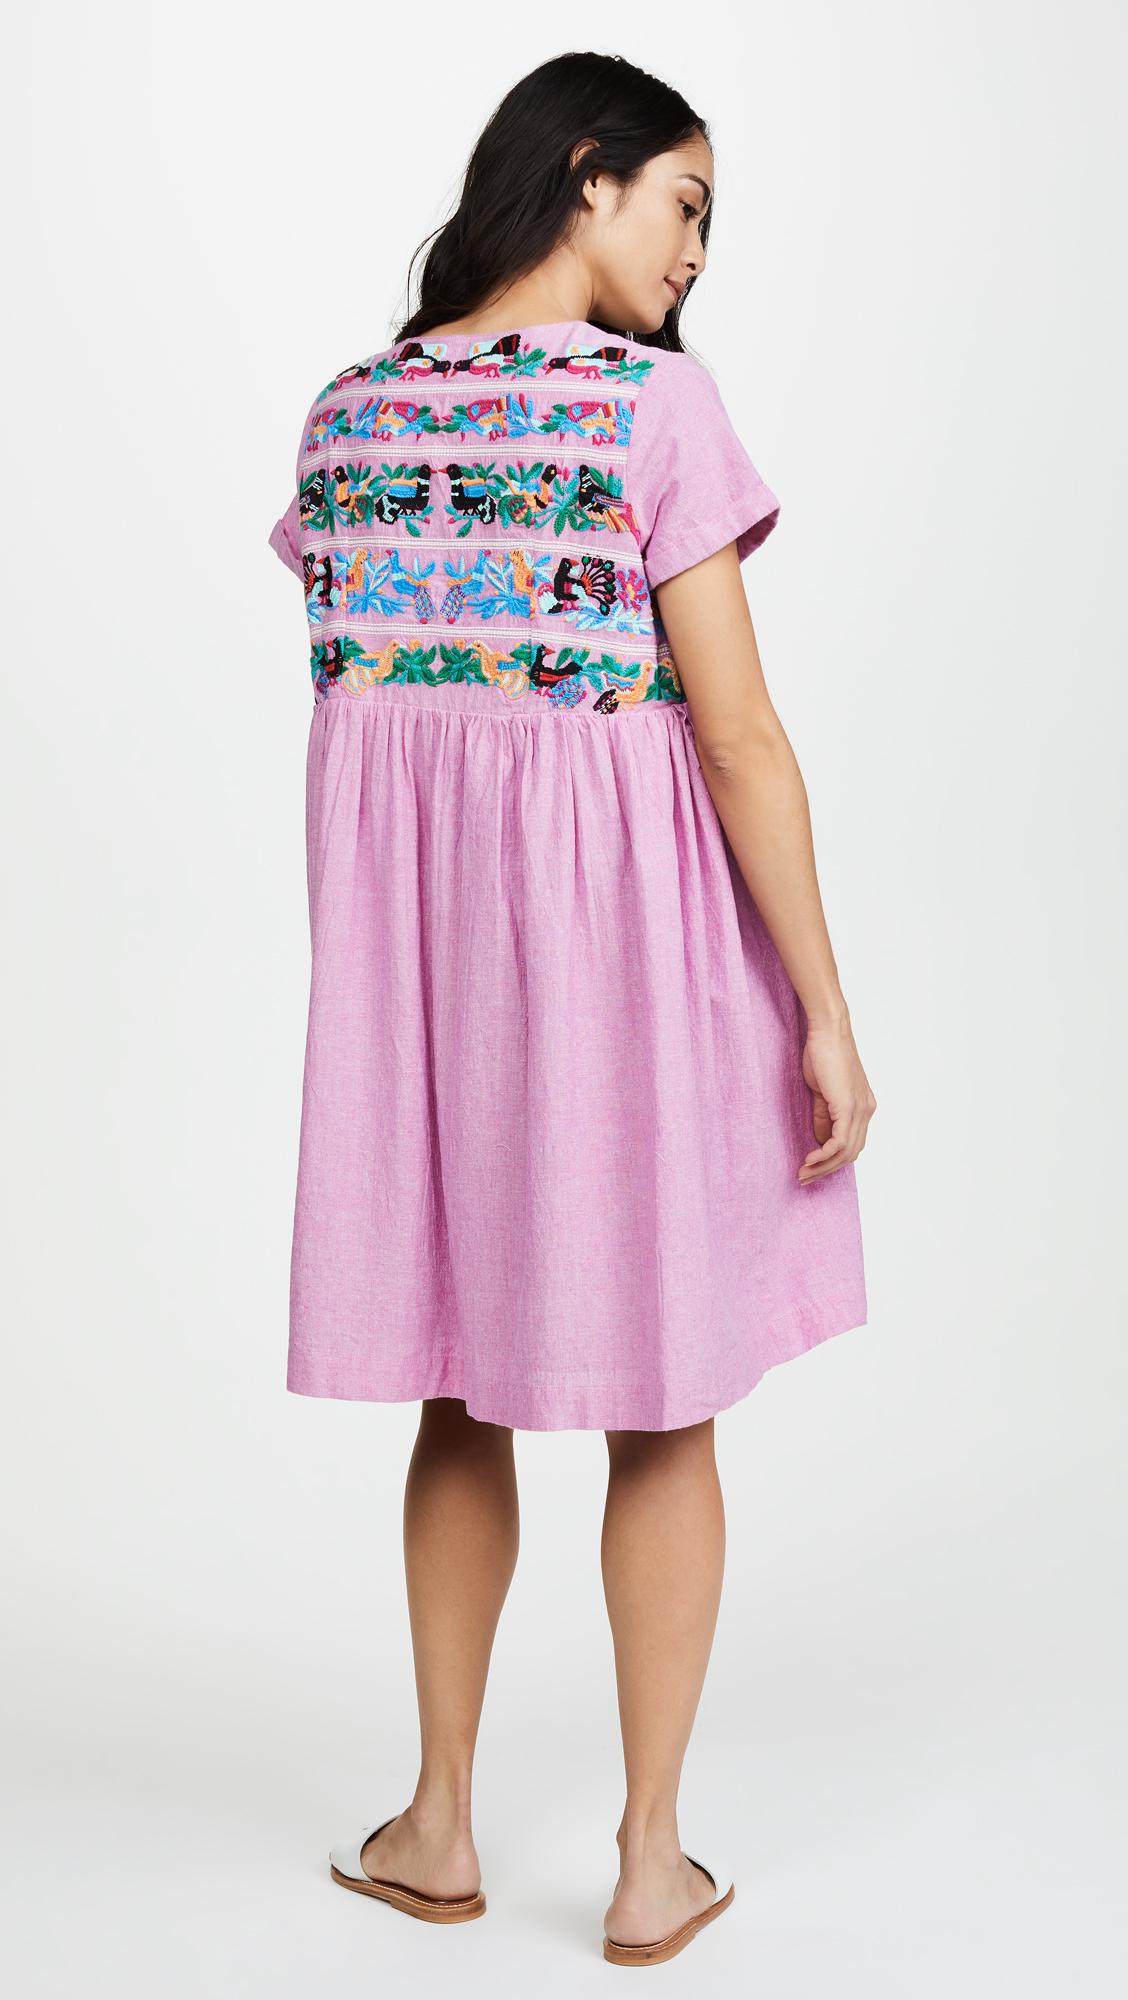 Lyst - Roberta Roller Rabbit Tarra Embellished Dress in Pink